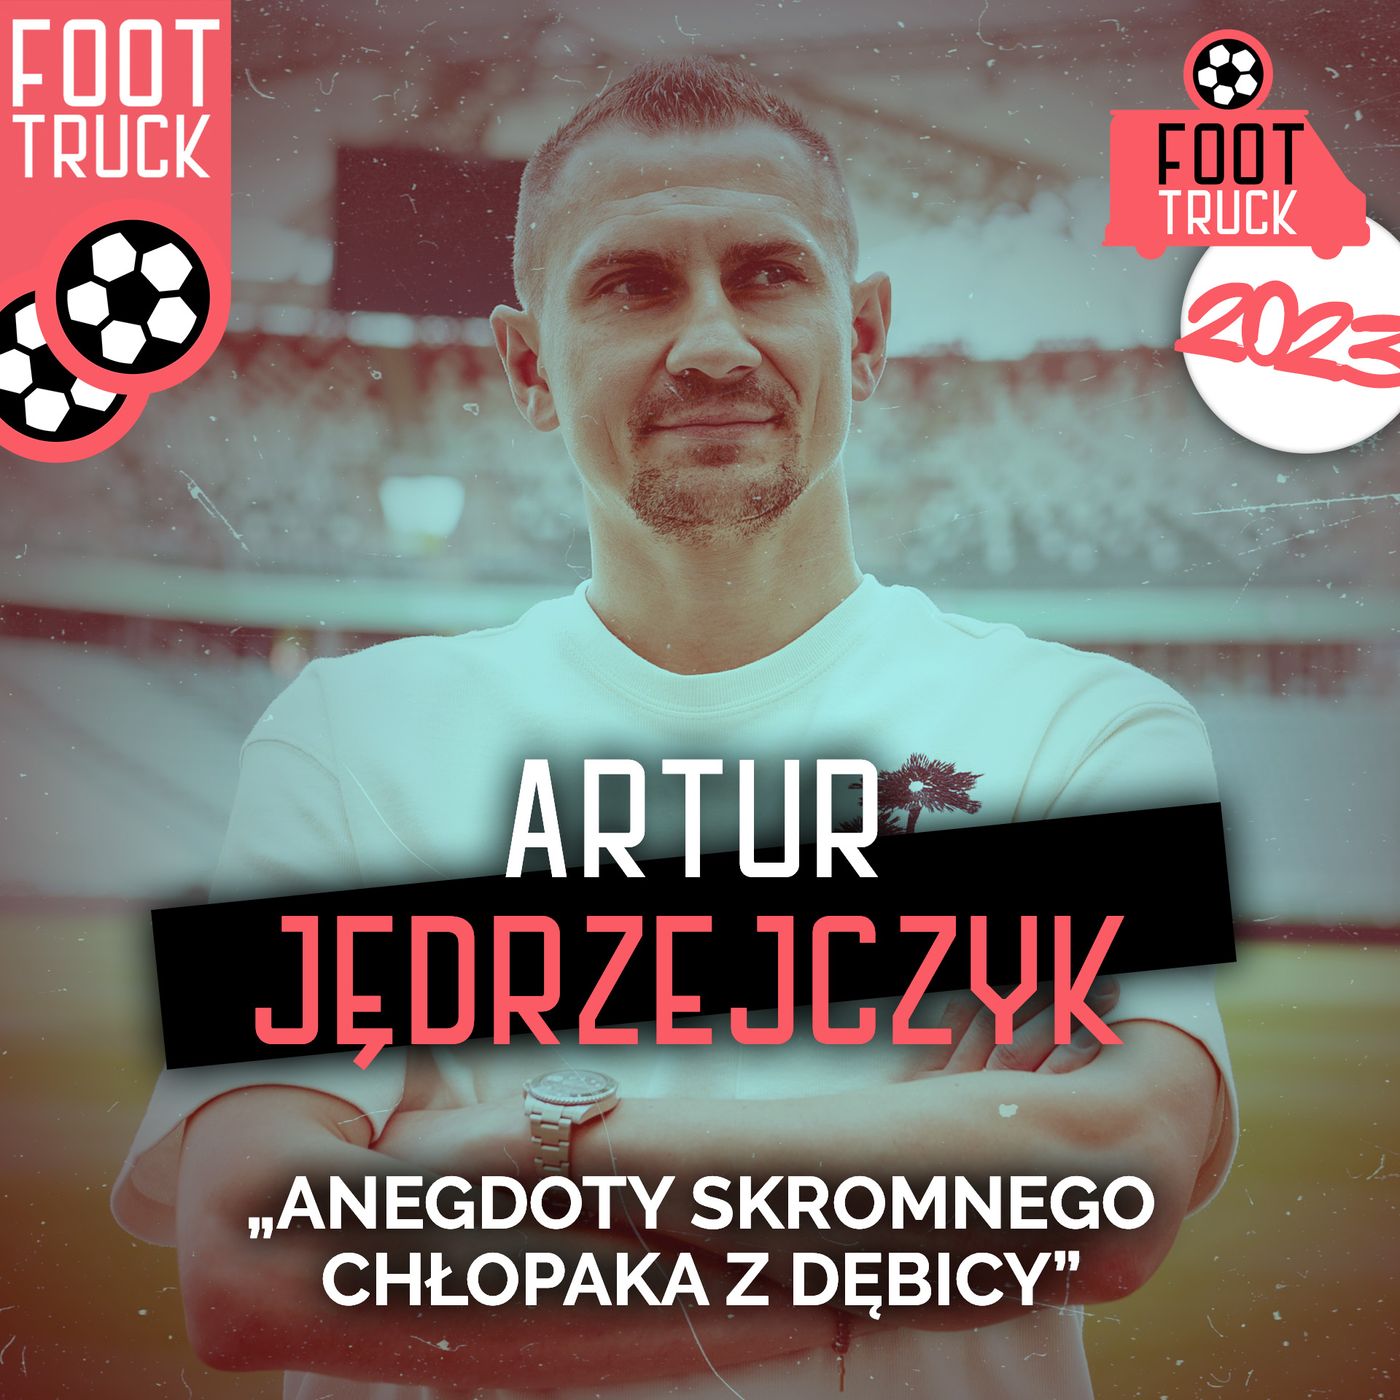 TOP #1 Foot Truck 2023: Artur Jędrzejczyk